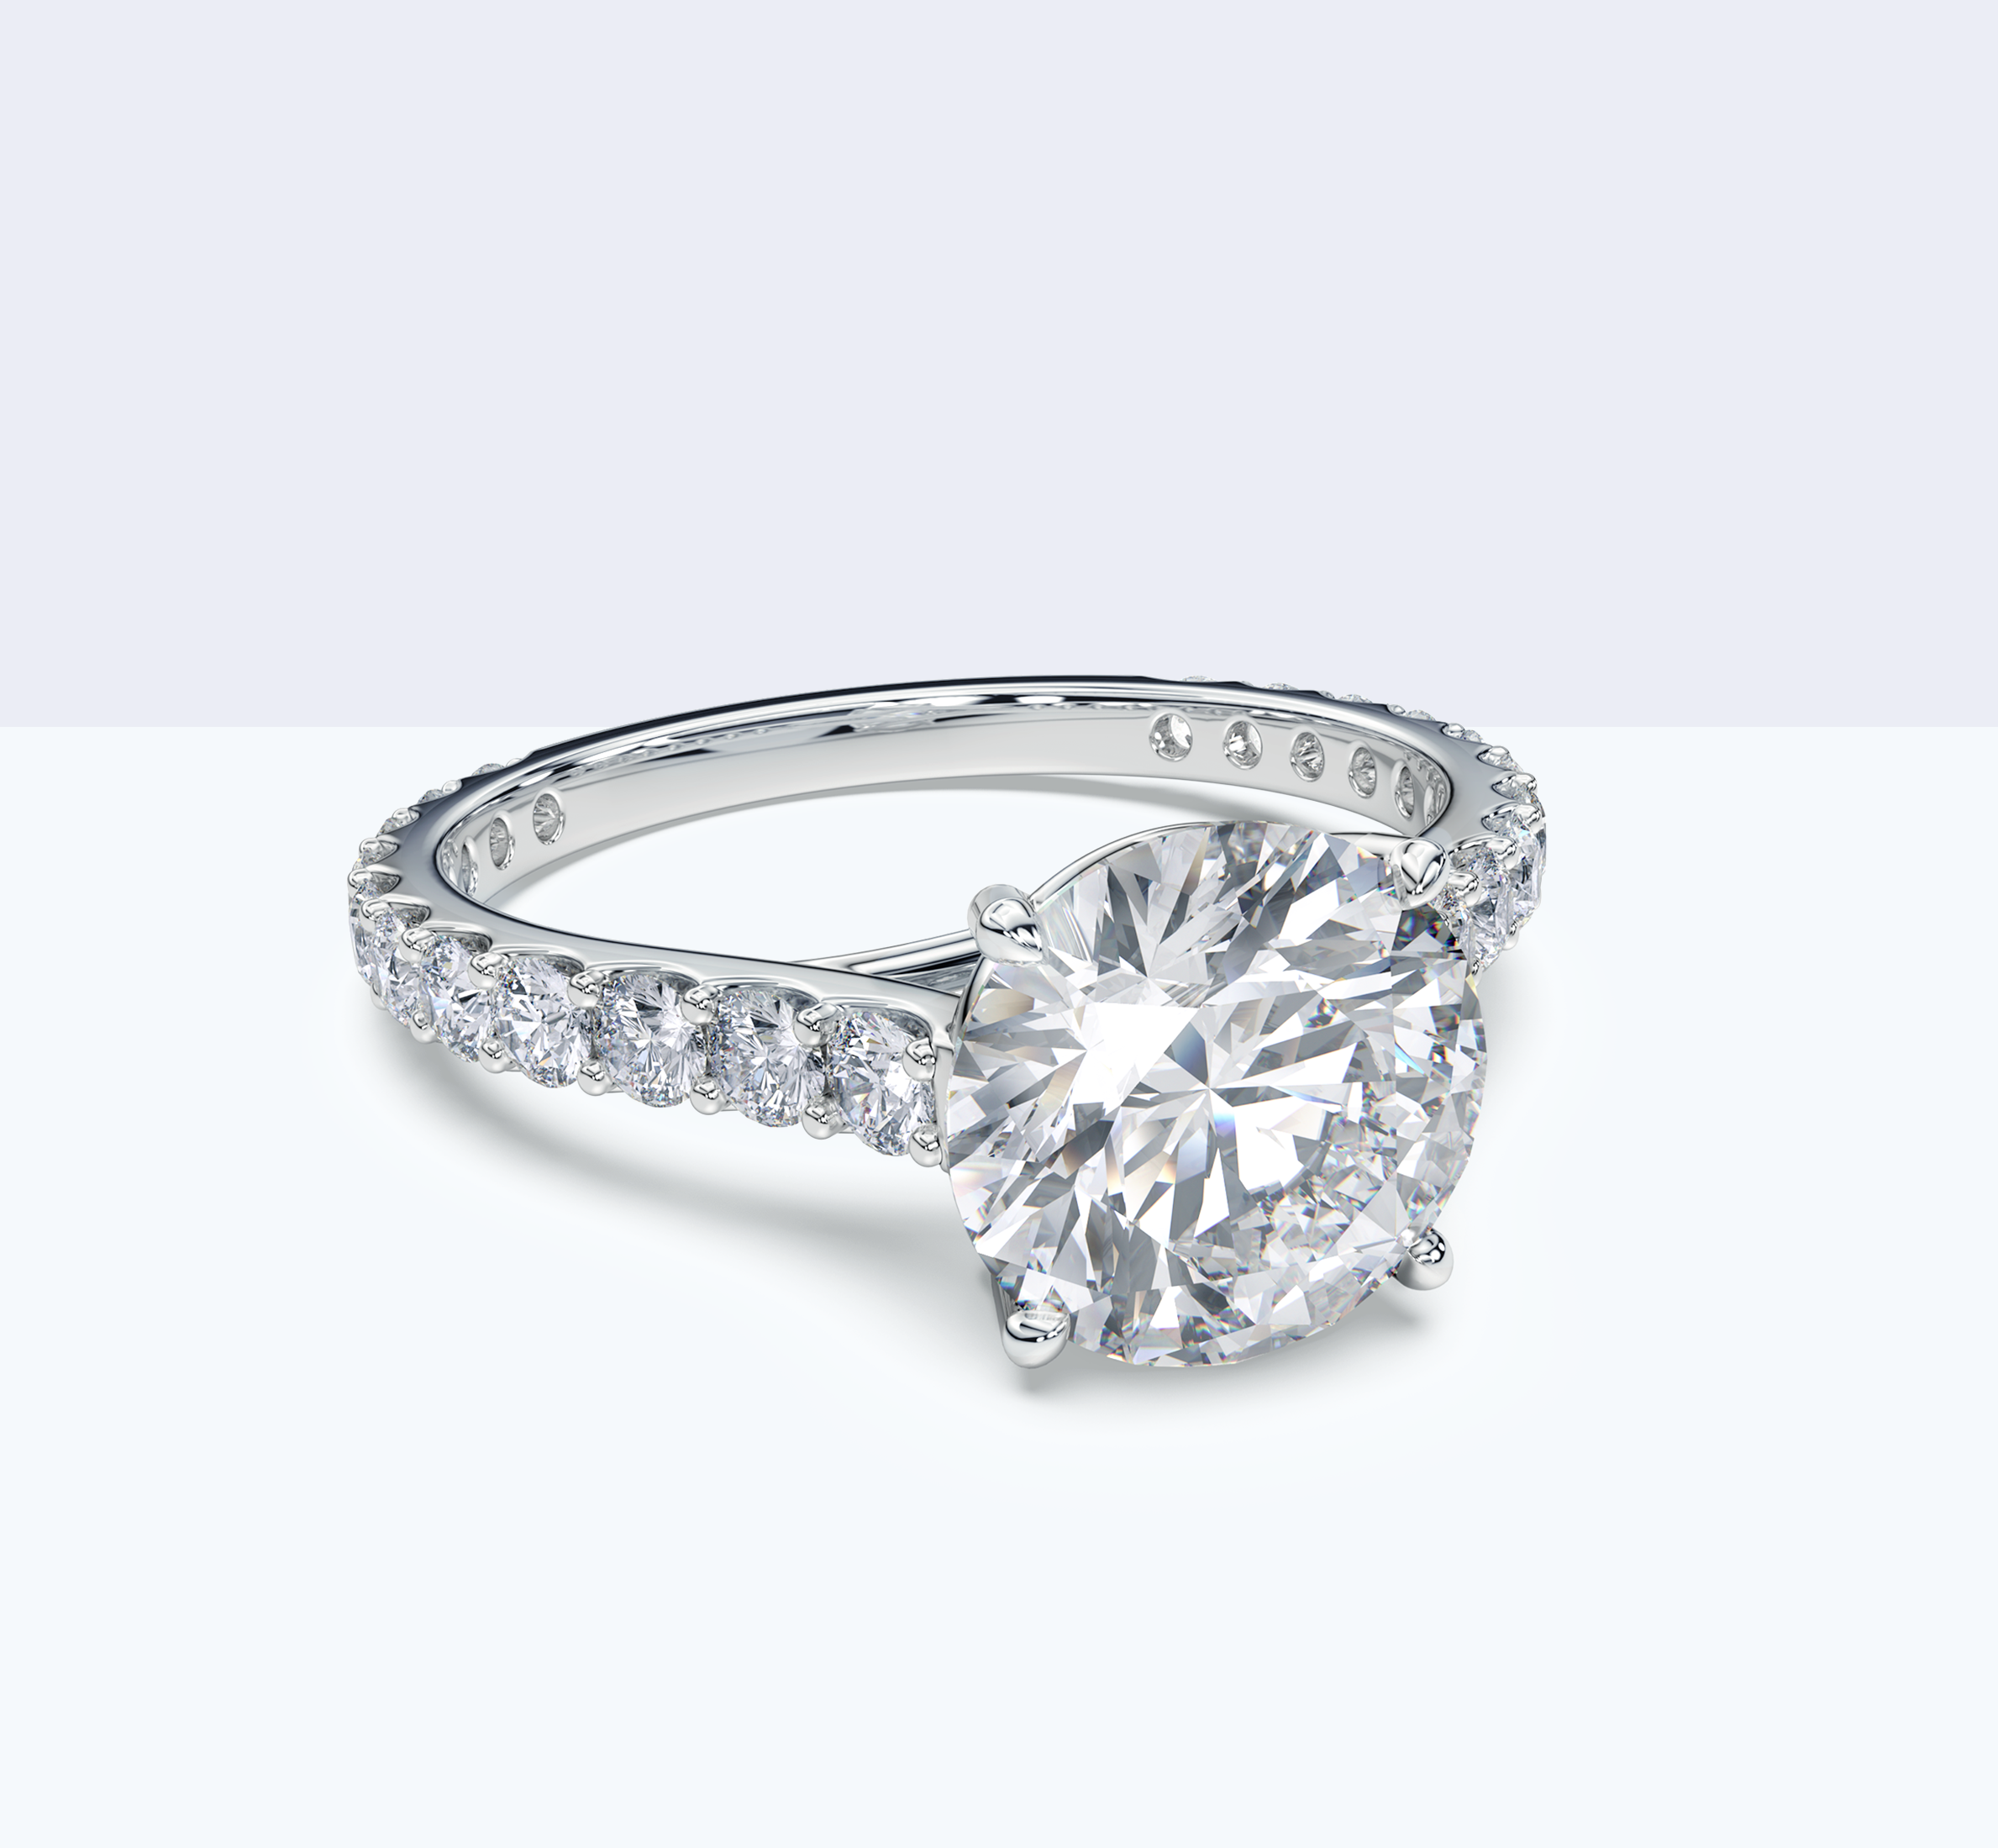 jewelry.item.diamondRings.title